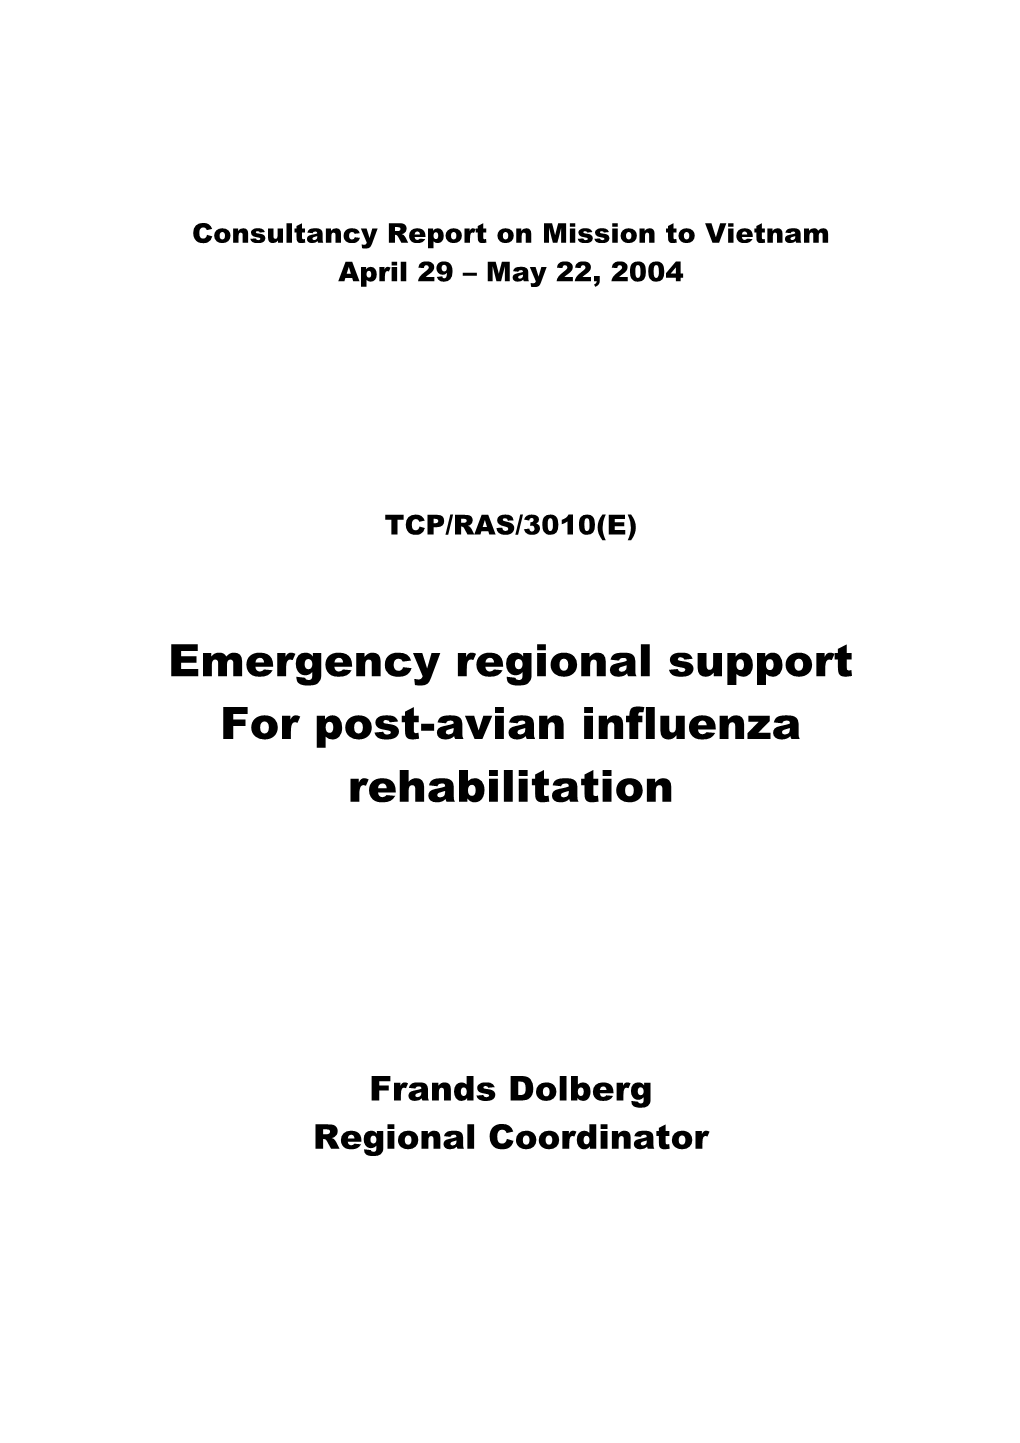 Emergency Regional Support for Post-Avian Influenza Rehabilitation